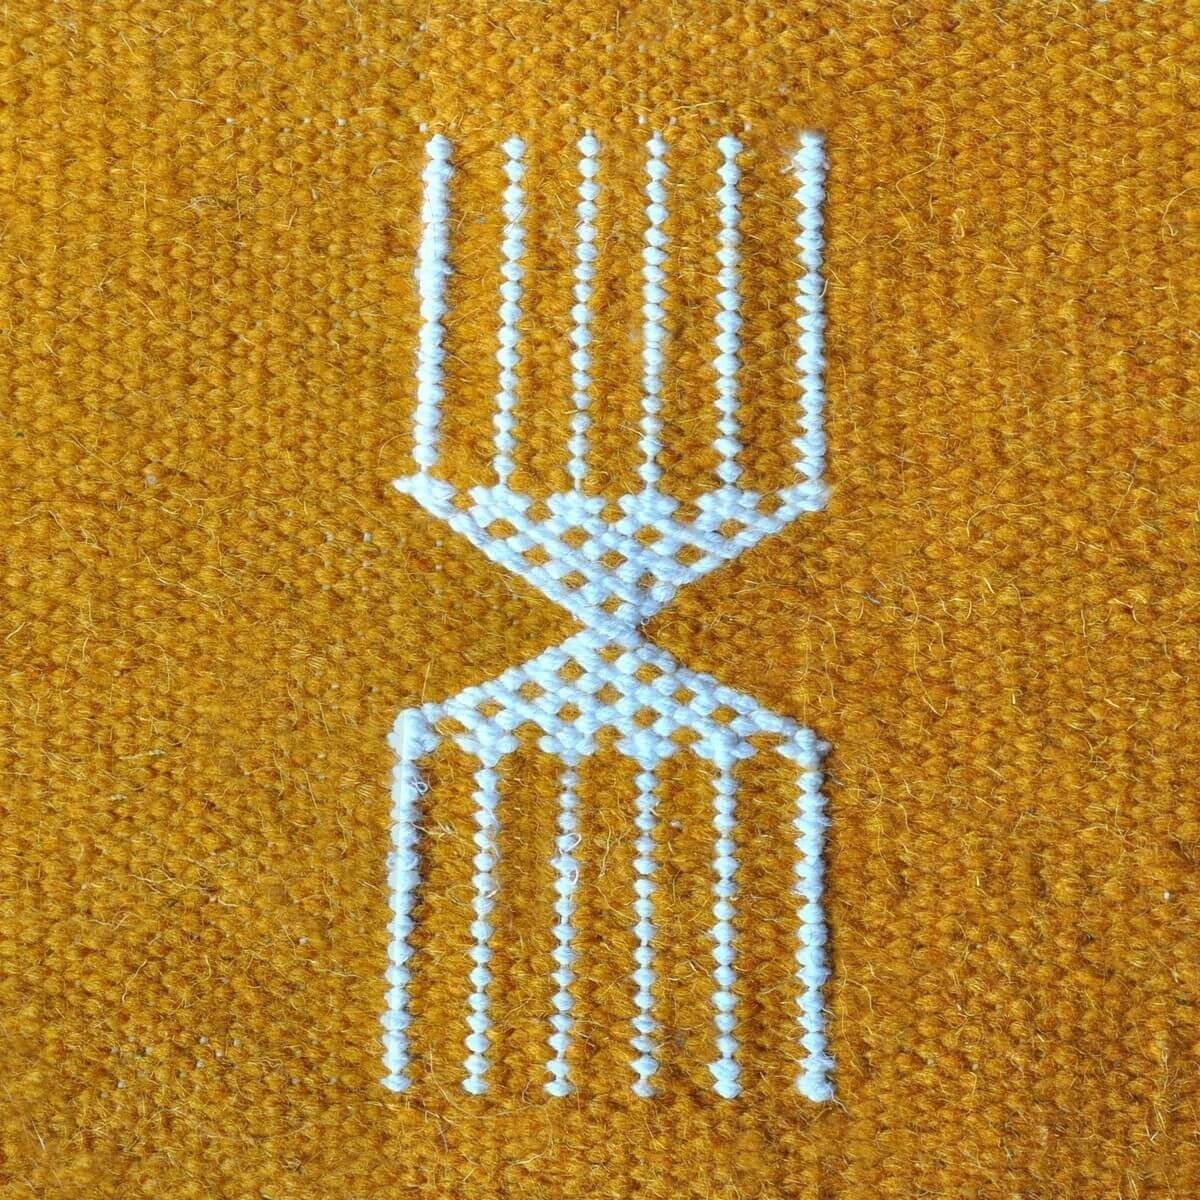 Tapete berbere Tapete Kilim Jawad 135x240 Branco/Amarelado (Tecidos à mão, Lã) Tapete tunisiano kilim, estilo marroquino. Tapete